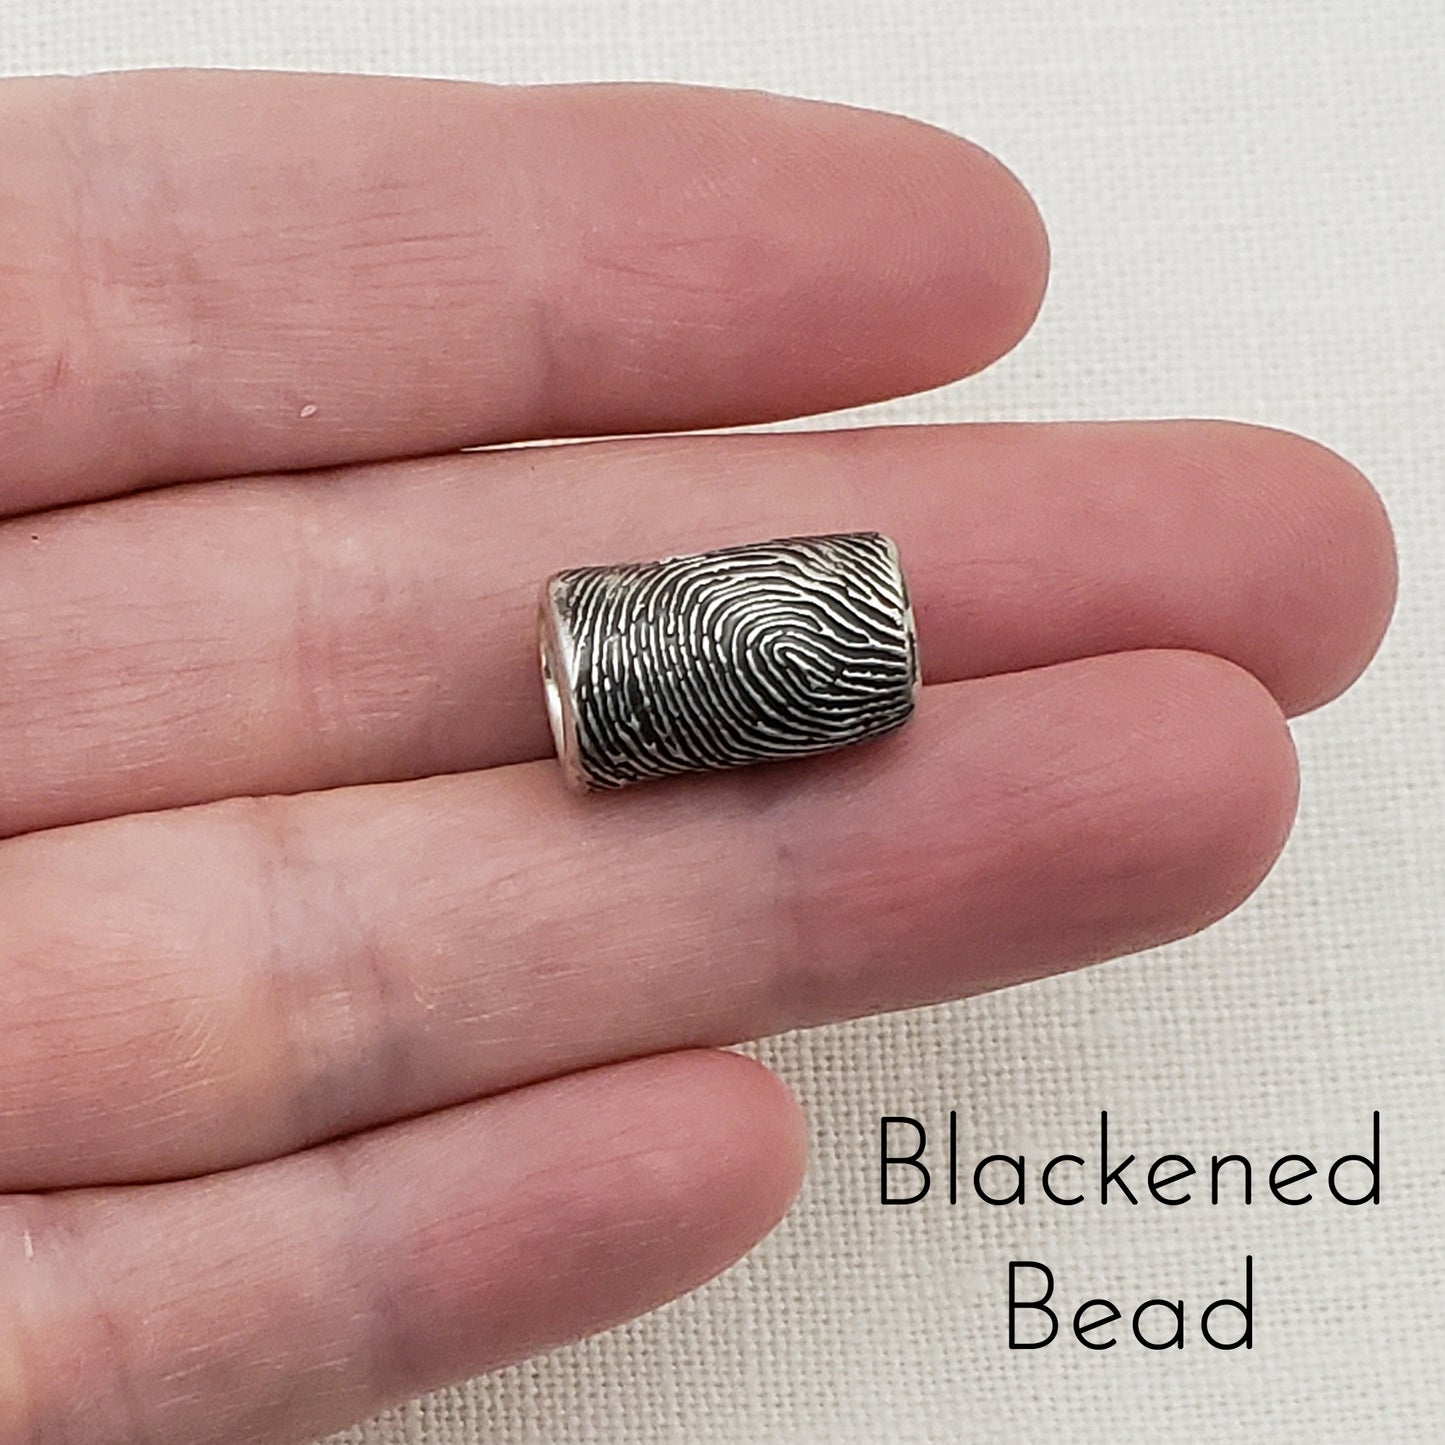 Fingerprint Bead and Leather Cord Bracelet